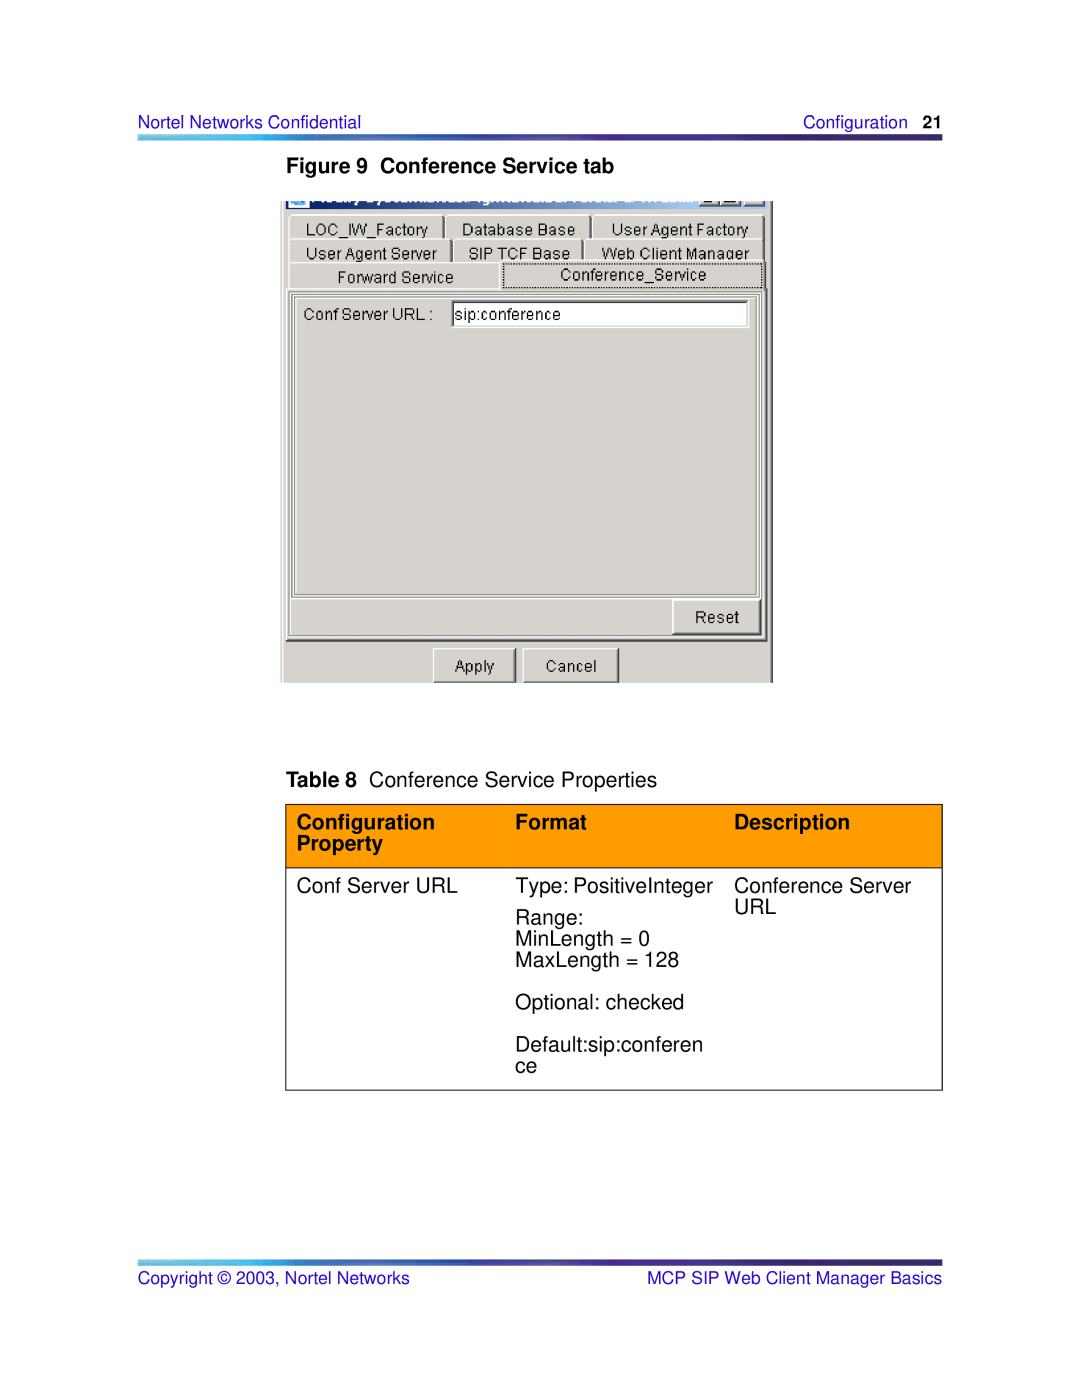 Nortel Networks NN10277-111 manual Conference Service tab, Configuration, Format, Description, Property 